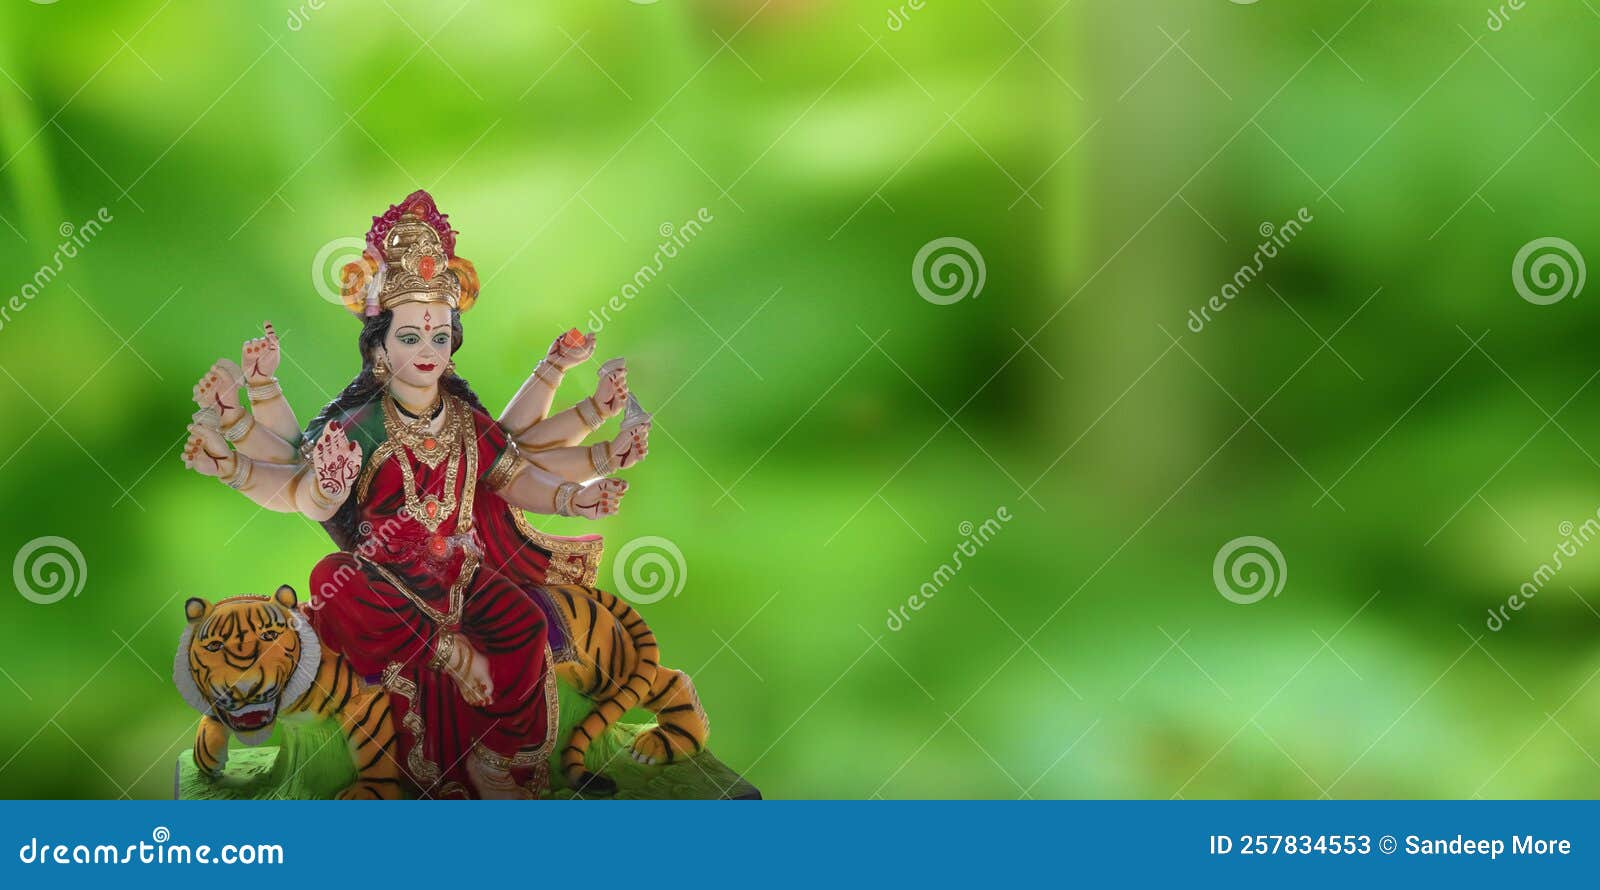 133 Durga Wallpaper Stock Photos - Free & Royalty-Free Stock Photos from  Dreamstime